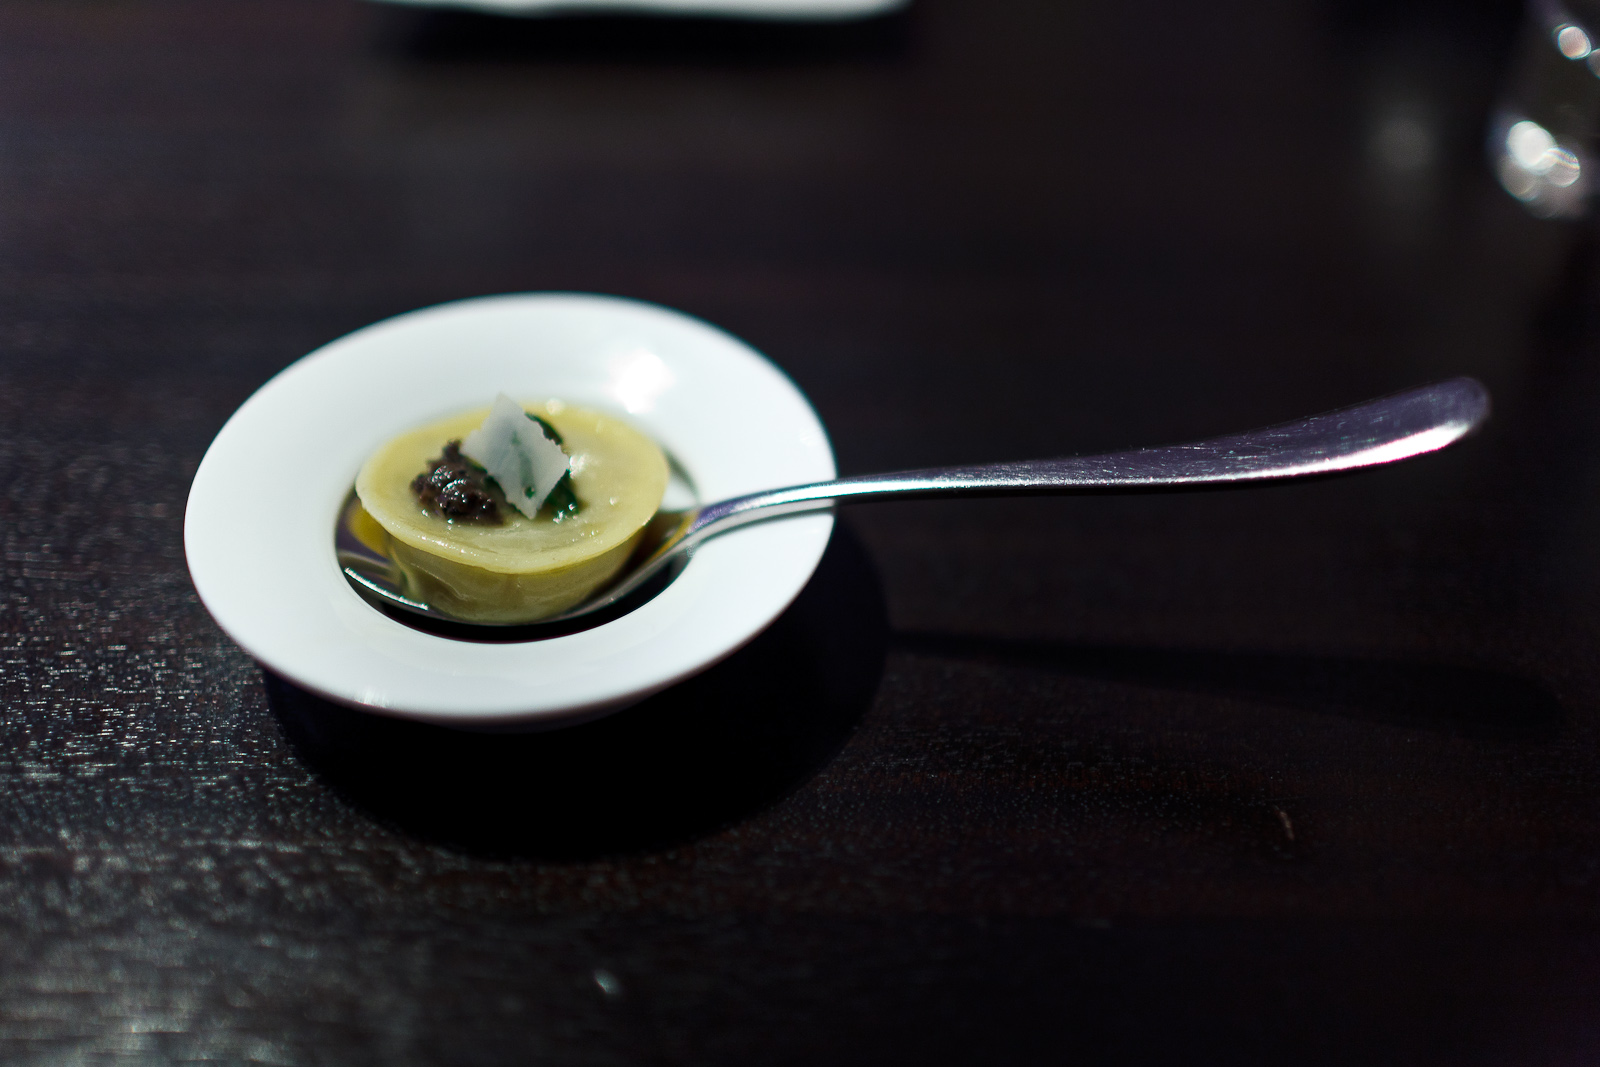 7th Course: Black truffle, explosion, romaine, parmesan